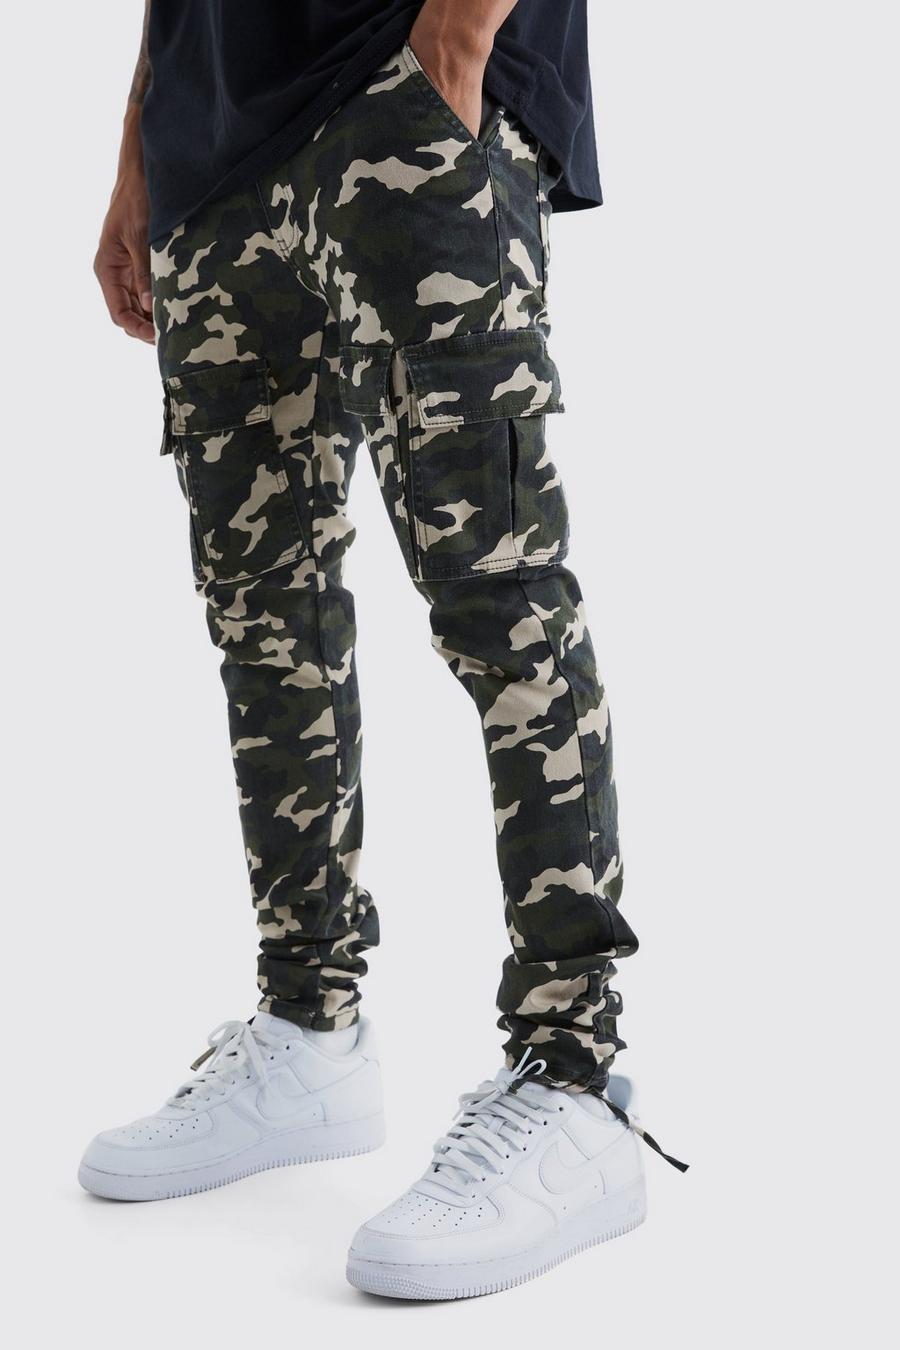 Khaki Kamouflagemönstrade byxor i skinny fit med fickor